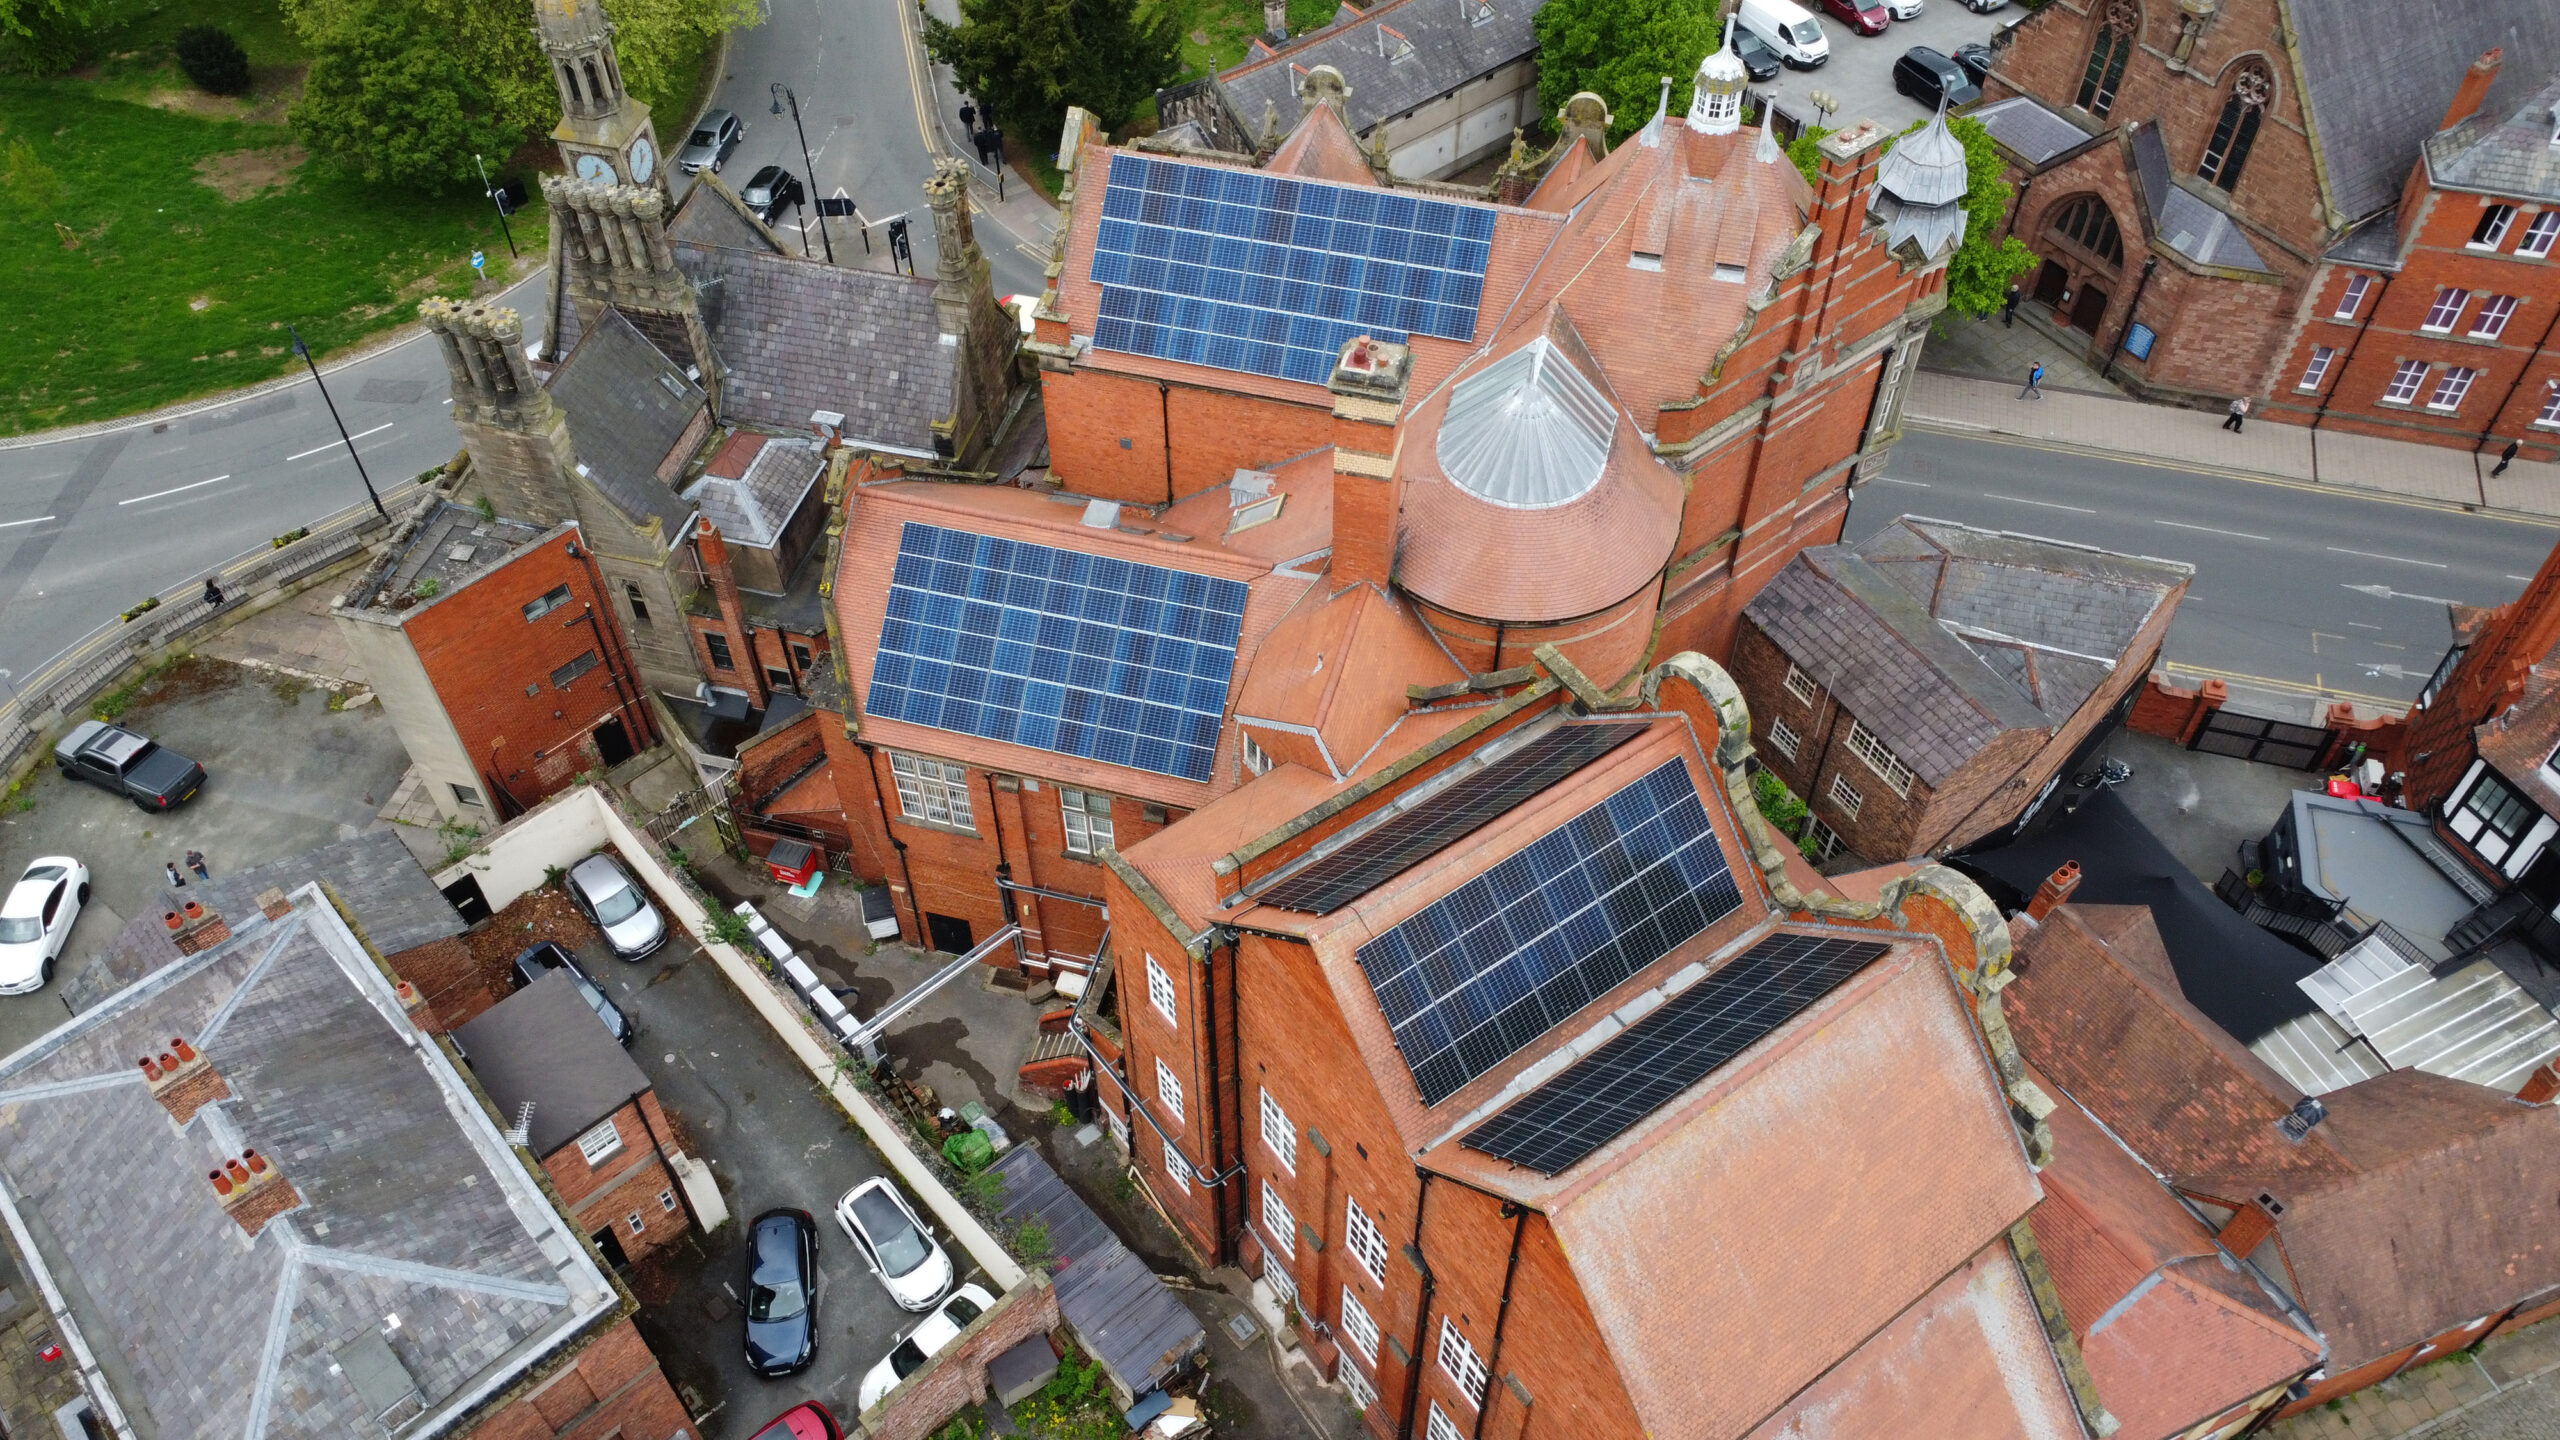 Solar Panels at Grosvenor Museum